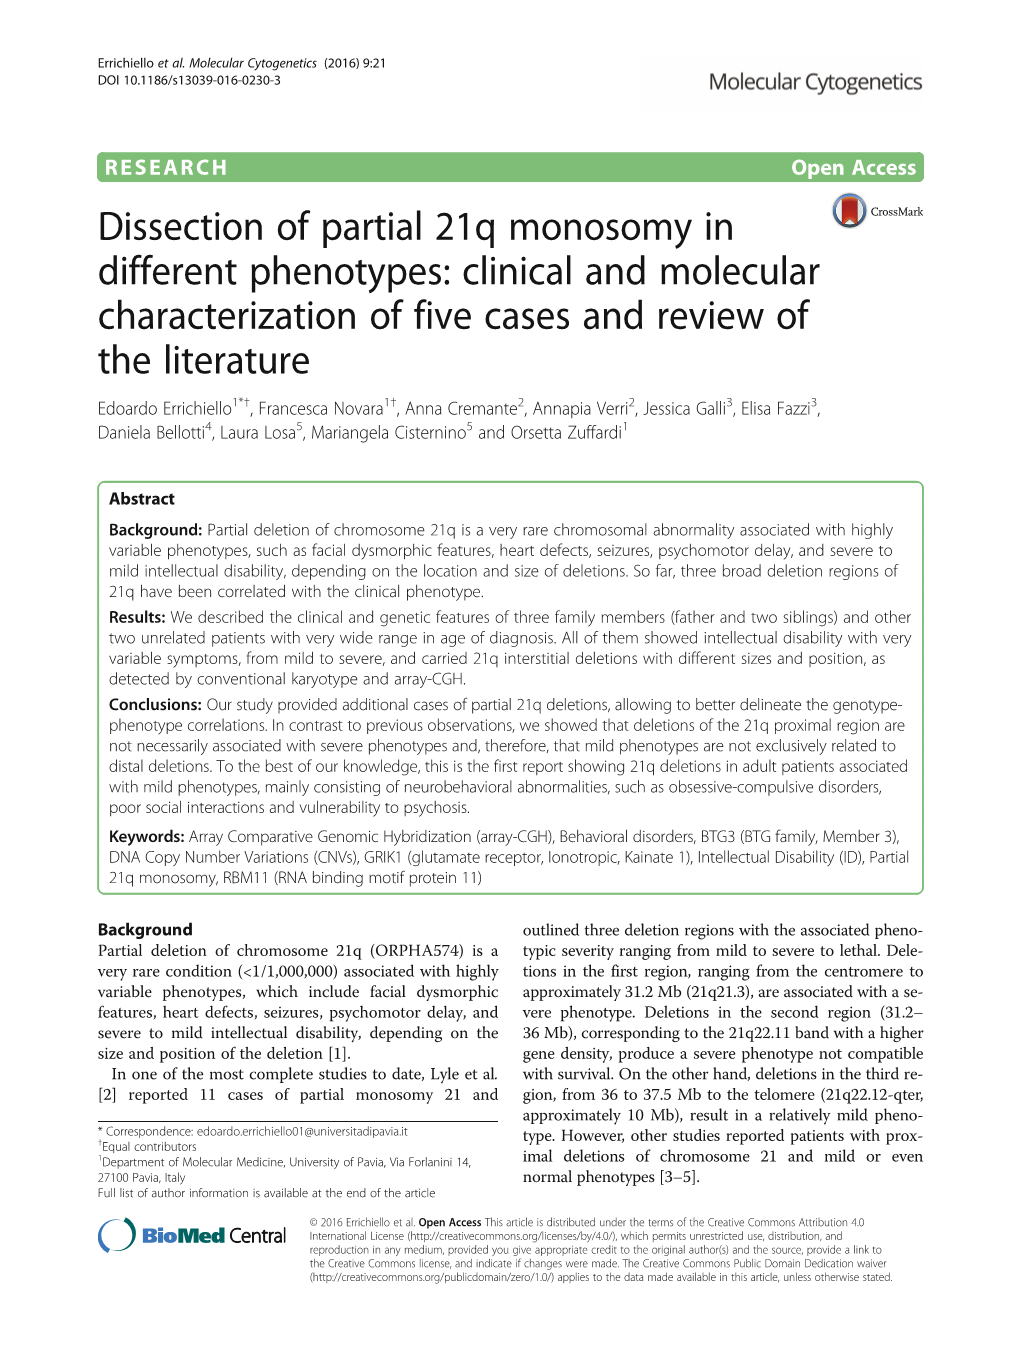 Dissection of Partial 21Q Monosomy in Different Phenotypes